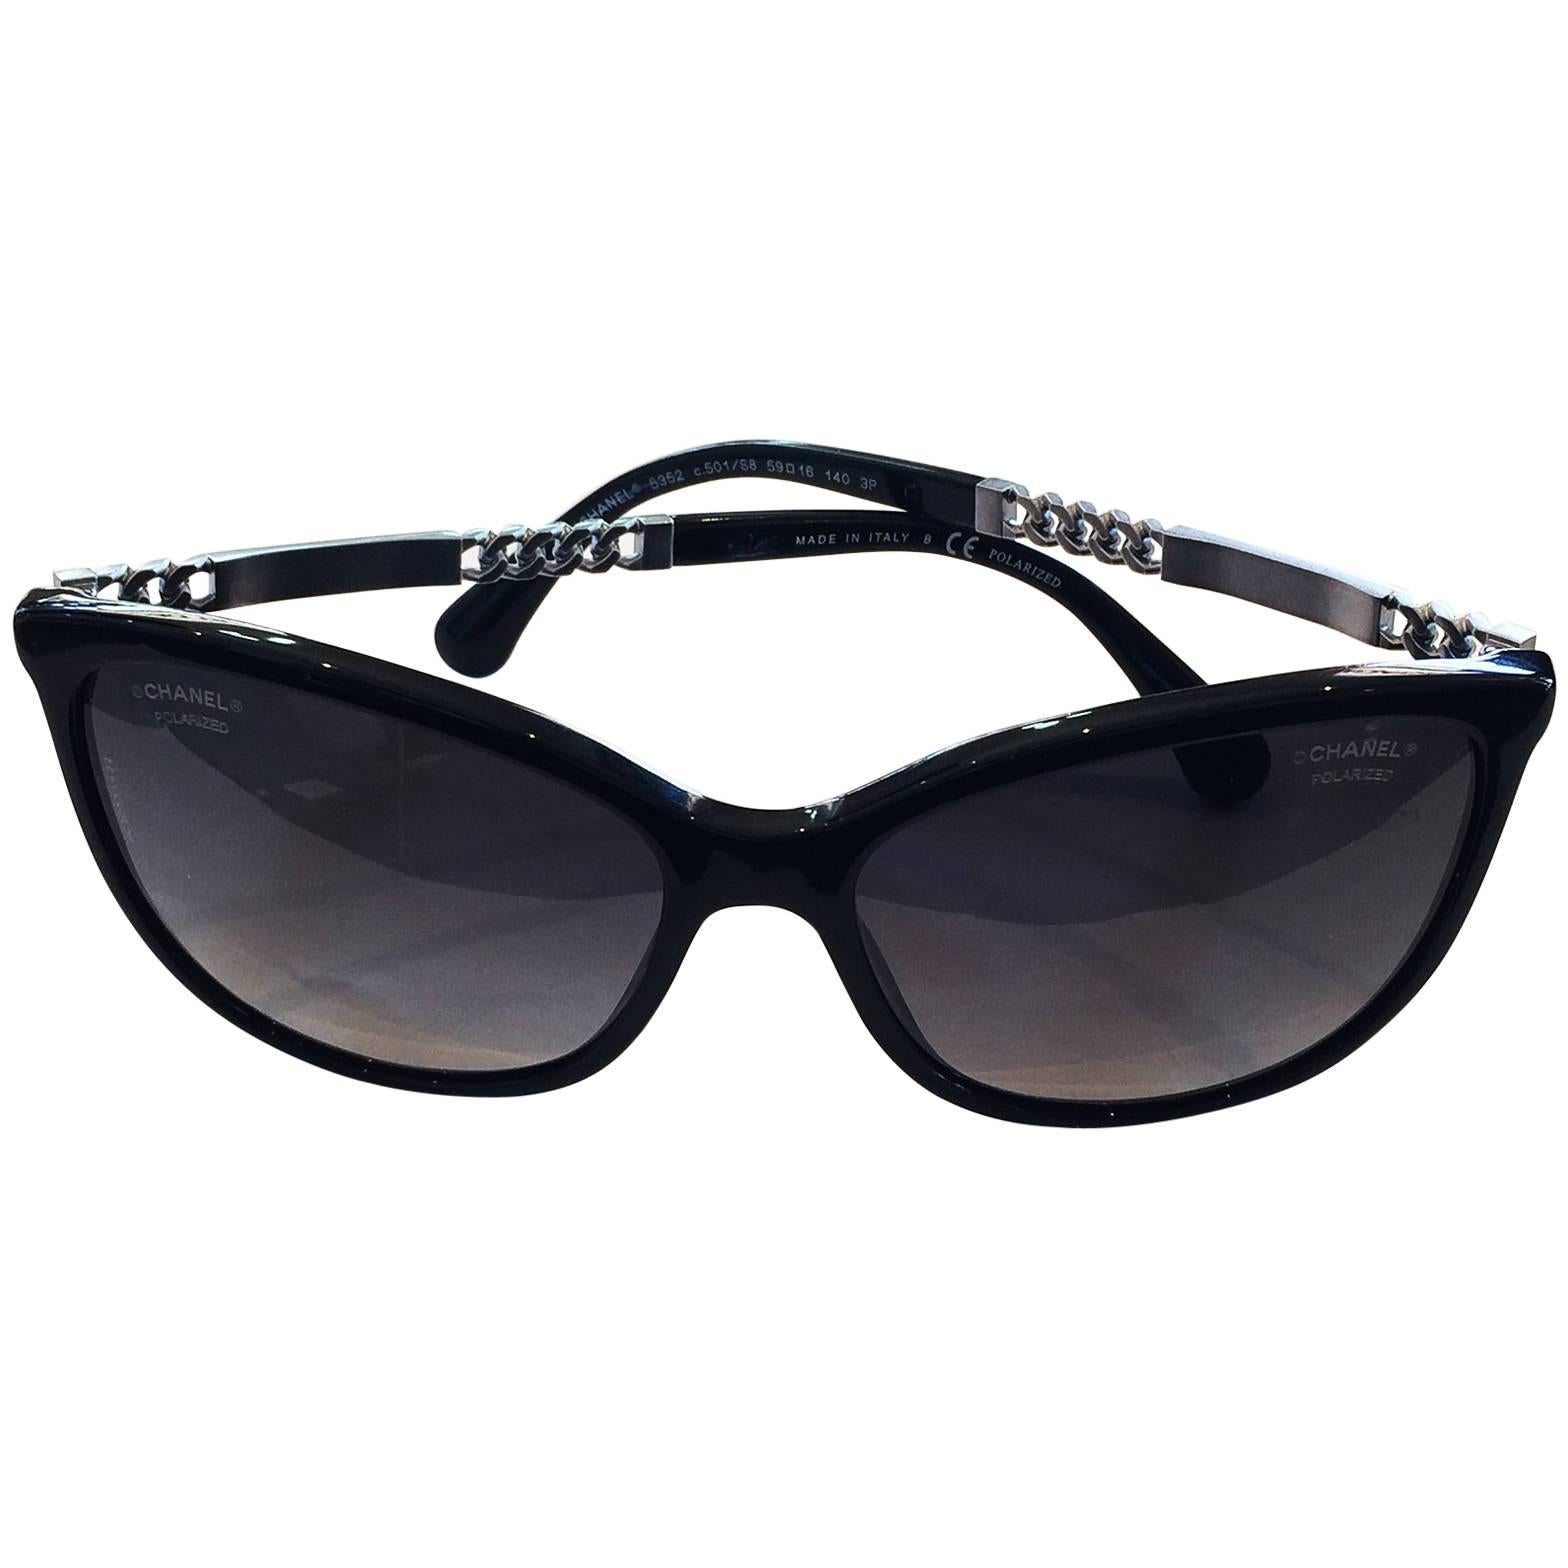 Authentic Chanel Sunglasses Model no. 5352